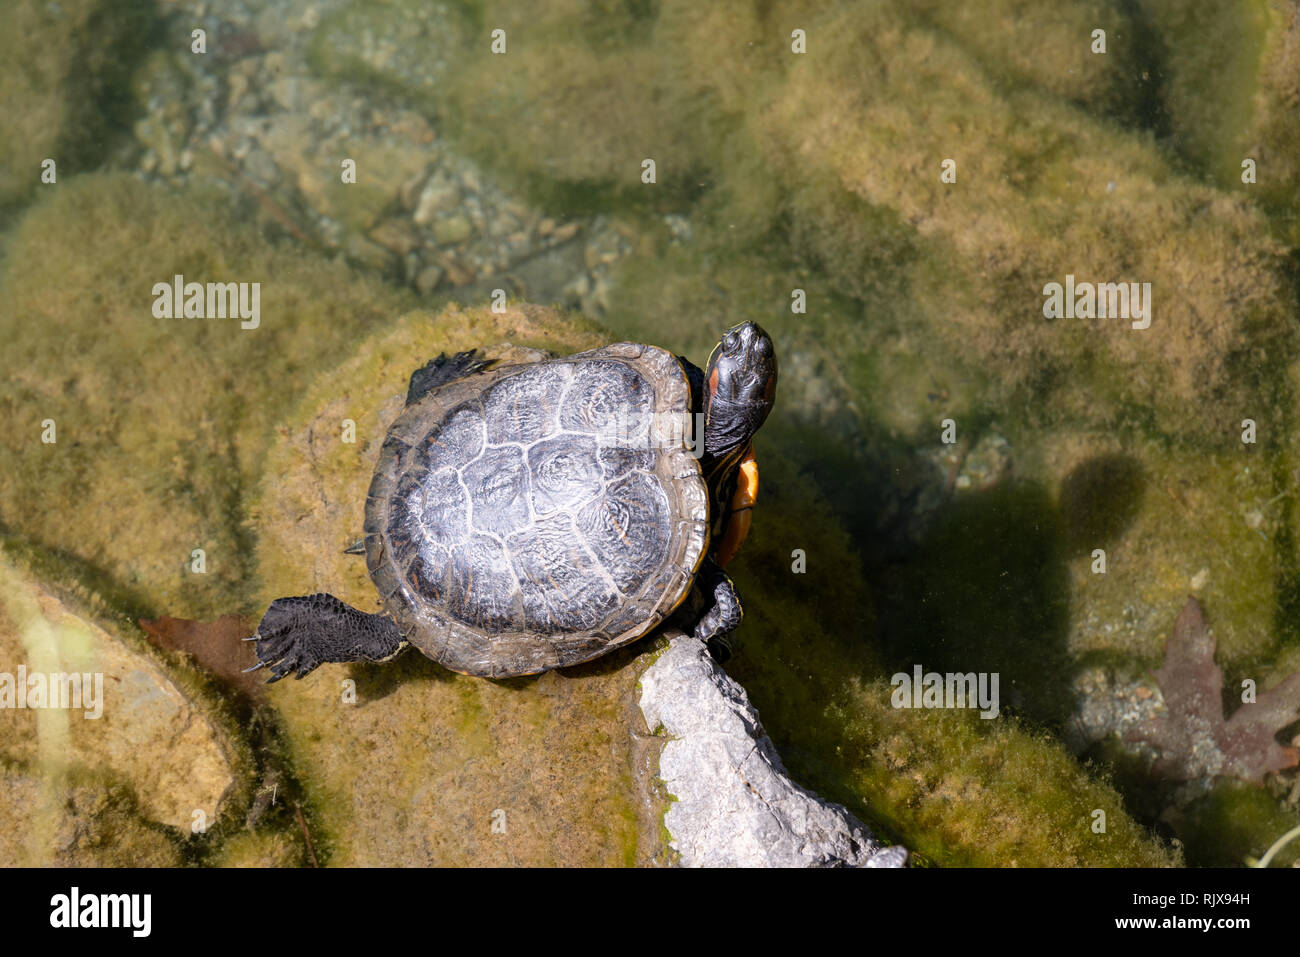 turtle sunbathing on a rock in the water Stock Photo